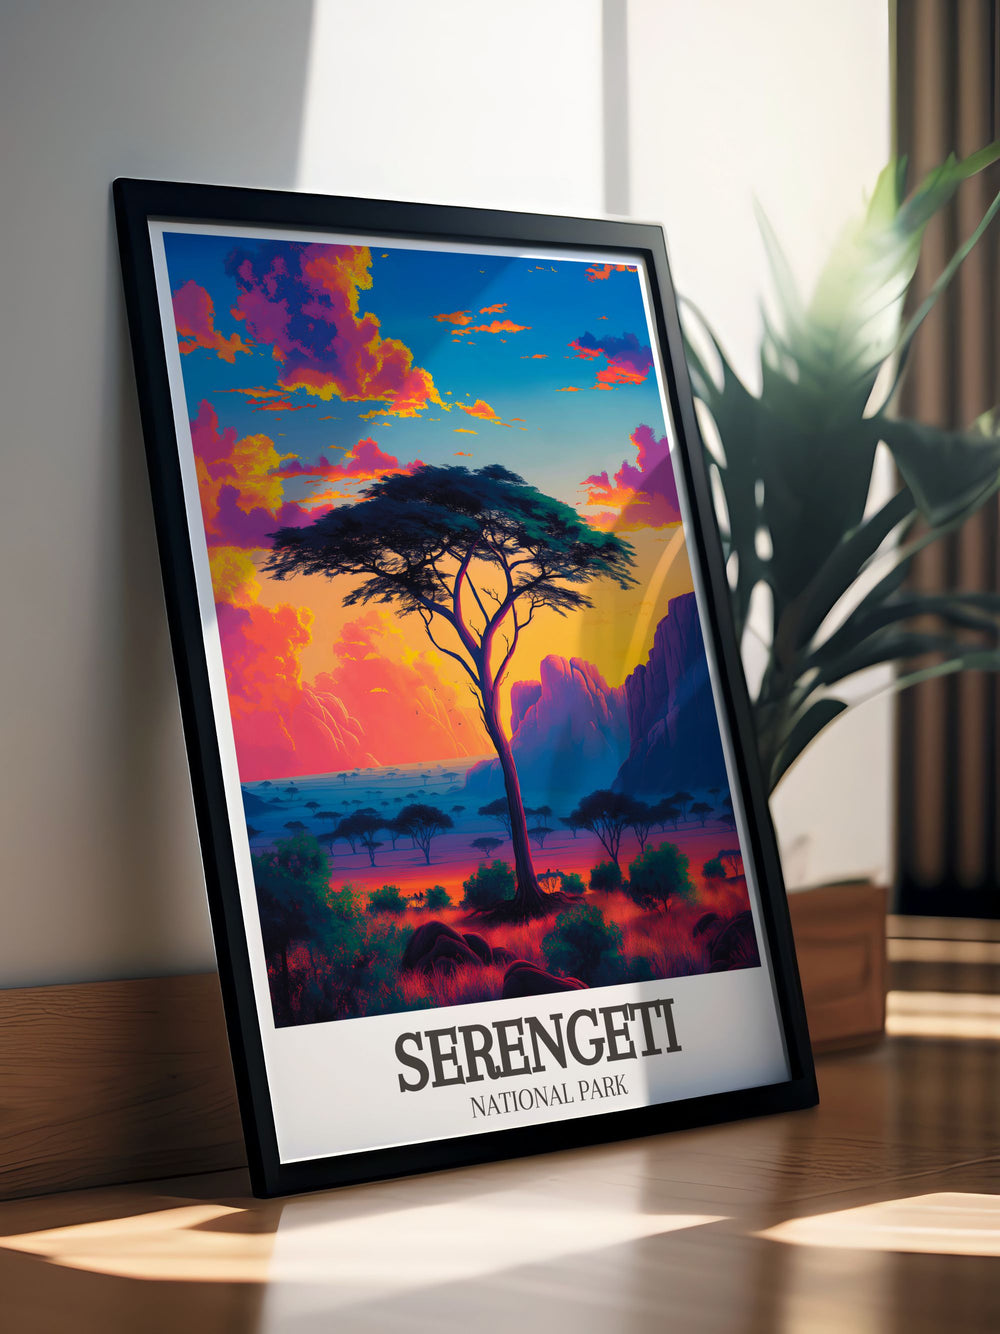 Stunning Serengeti wall art featuring Acacia tree savanna scene capturing the essence of Africa safari art ideal for nature and adventure enthusiasts